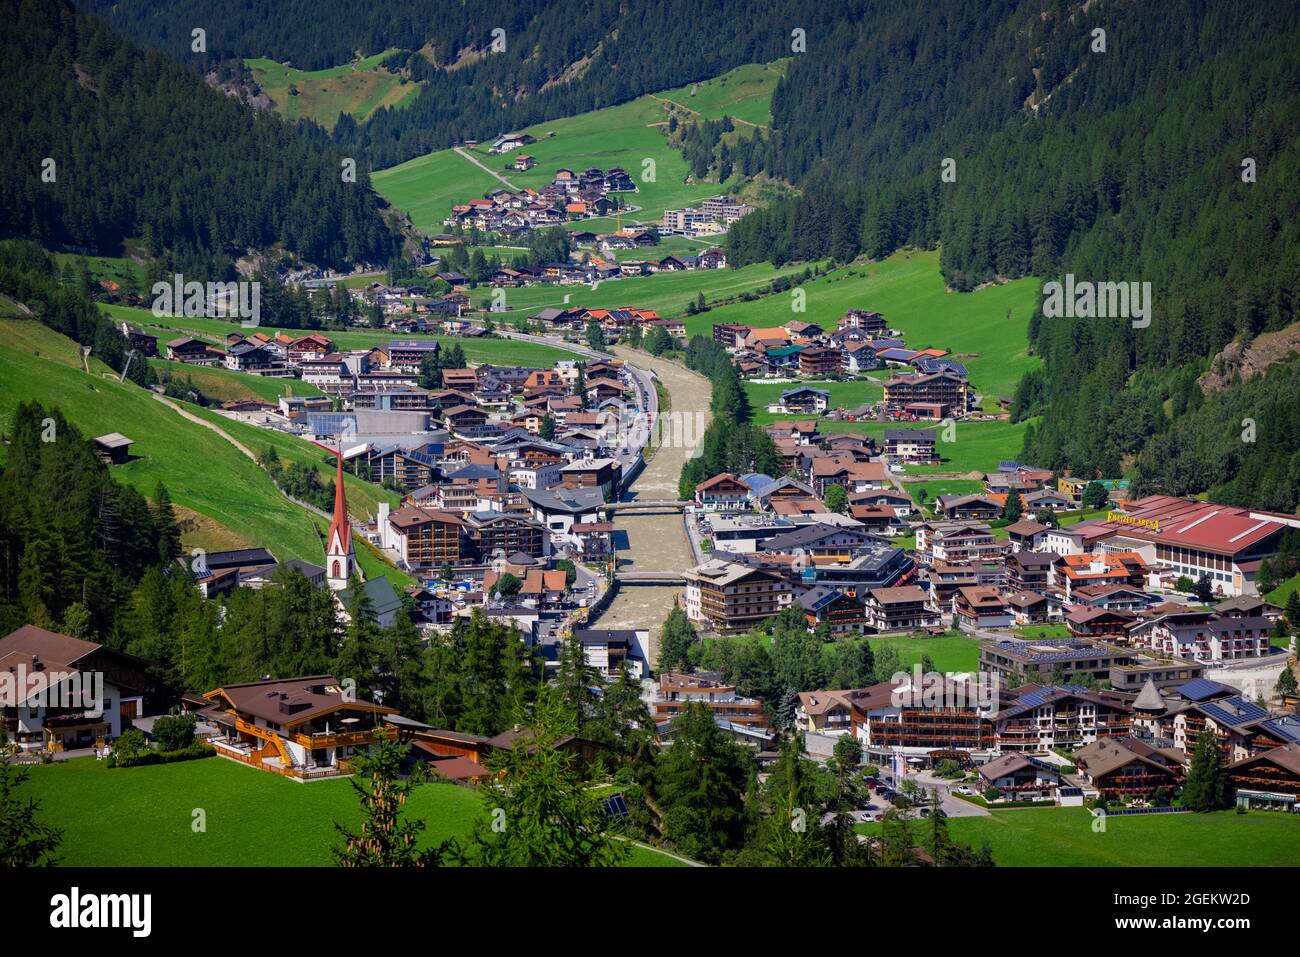 Famous village of Soelden in Austria - a popular winter sports area Stock Photo